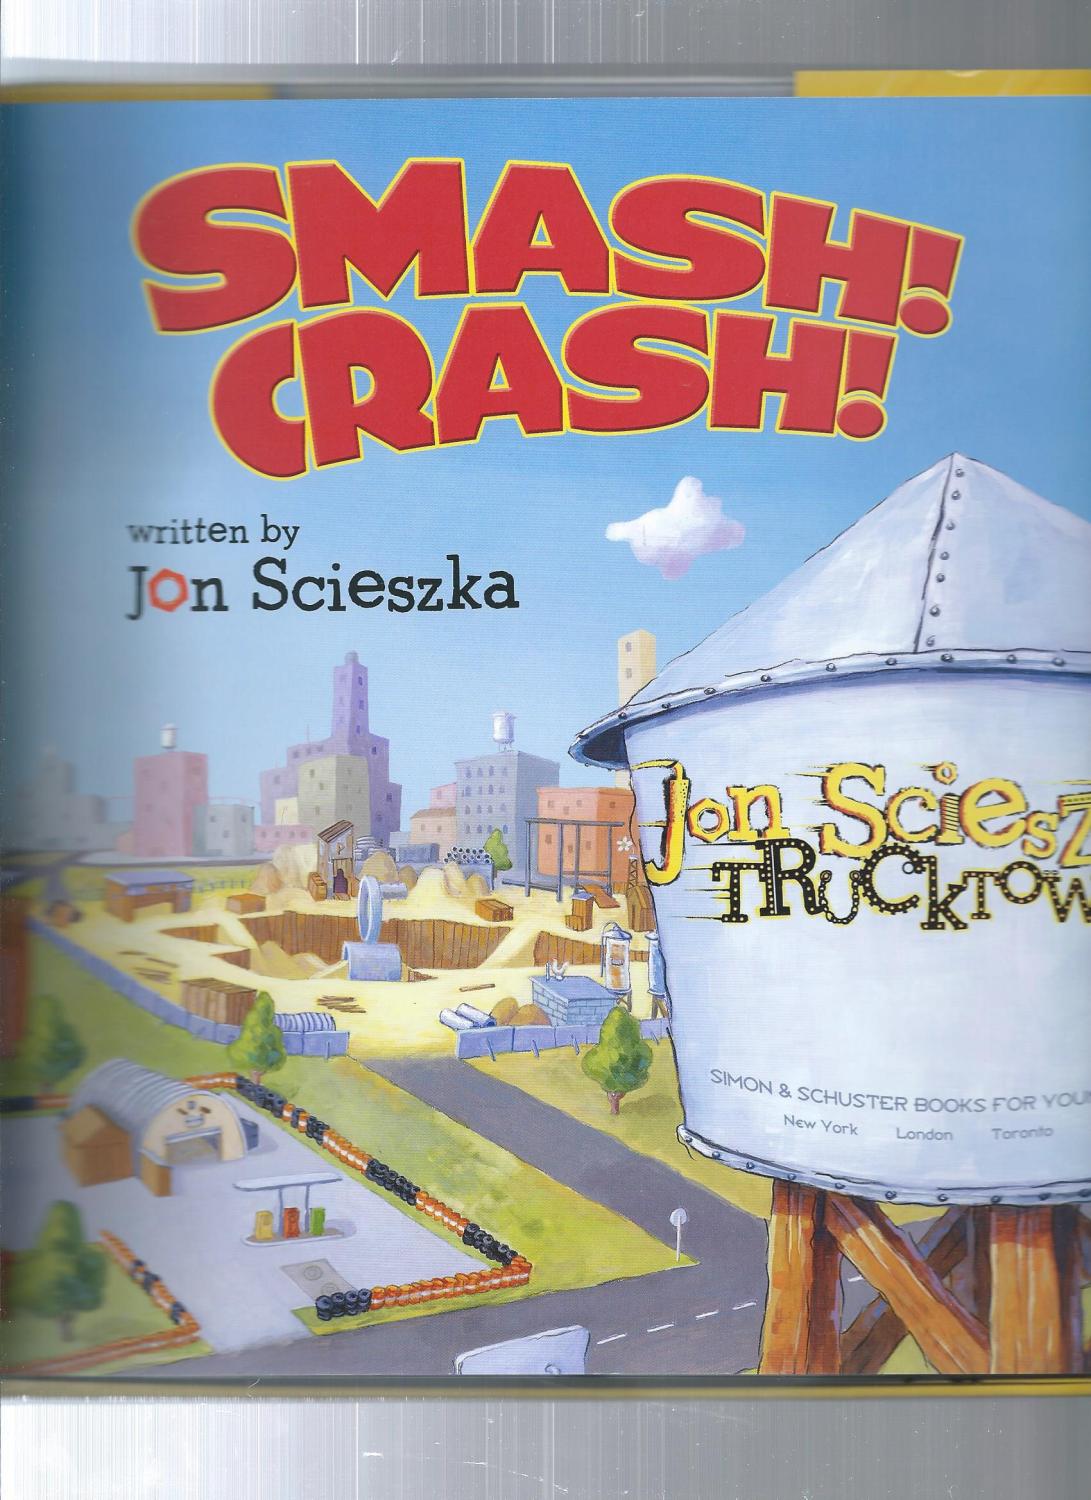 Smash! Crash! (Jon Scieszka's Trucktown Series) by Jon Scieszka, David  Shannon, Loren Long, David Gordon, Hardcover